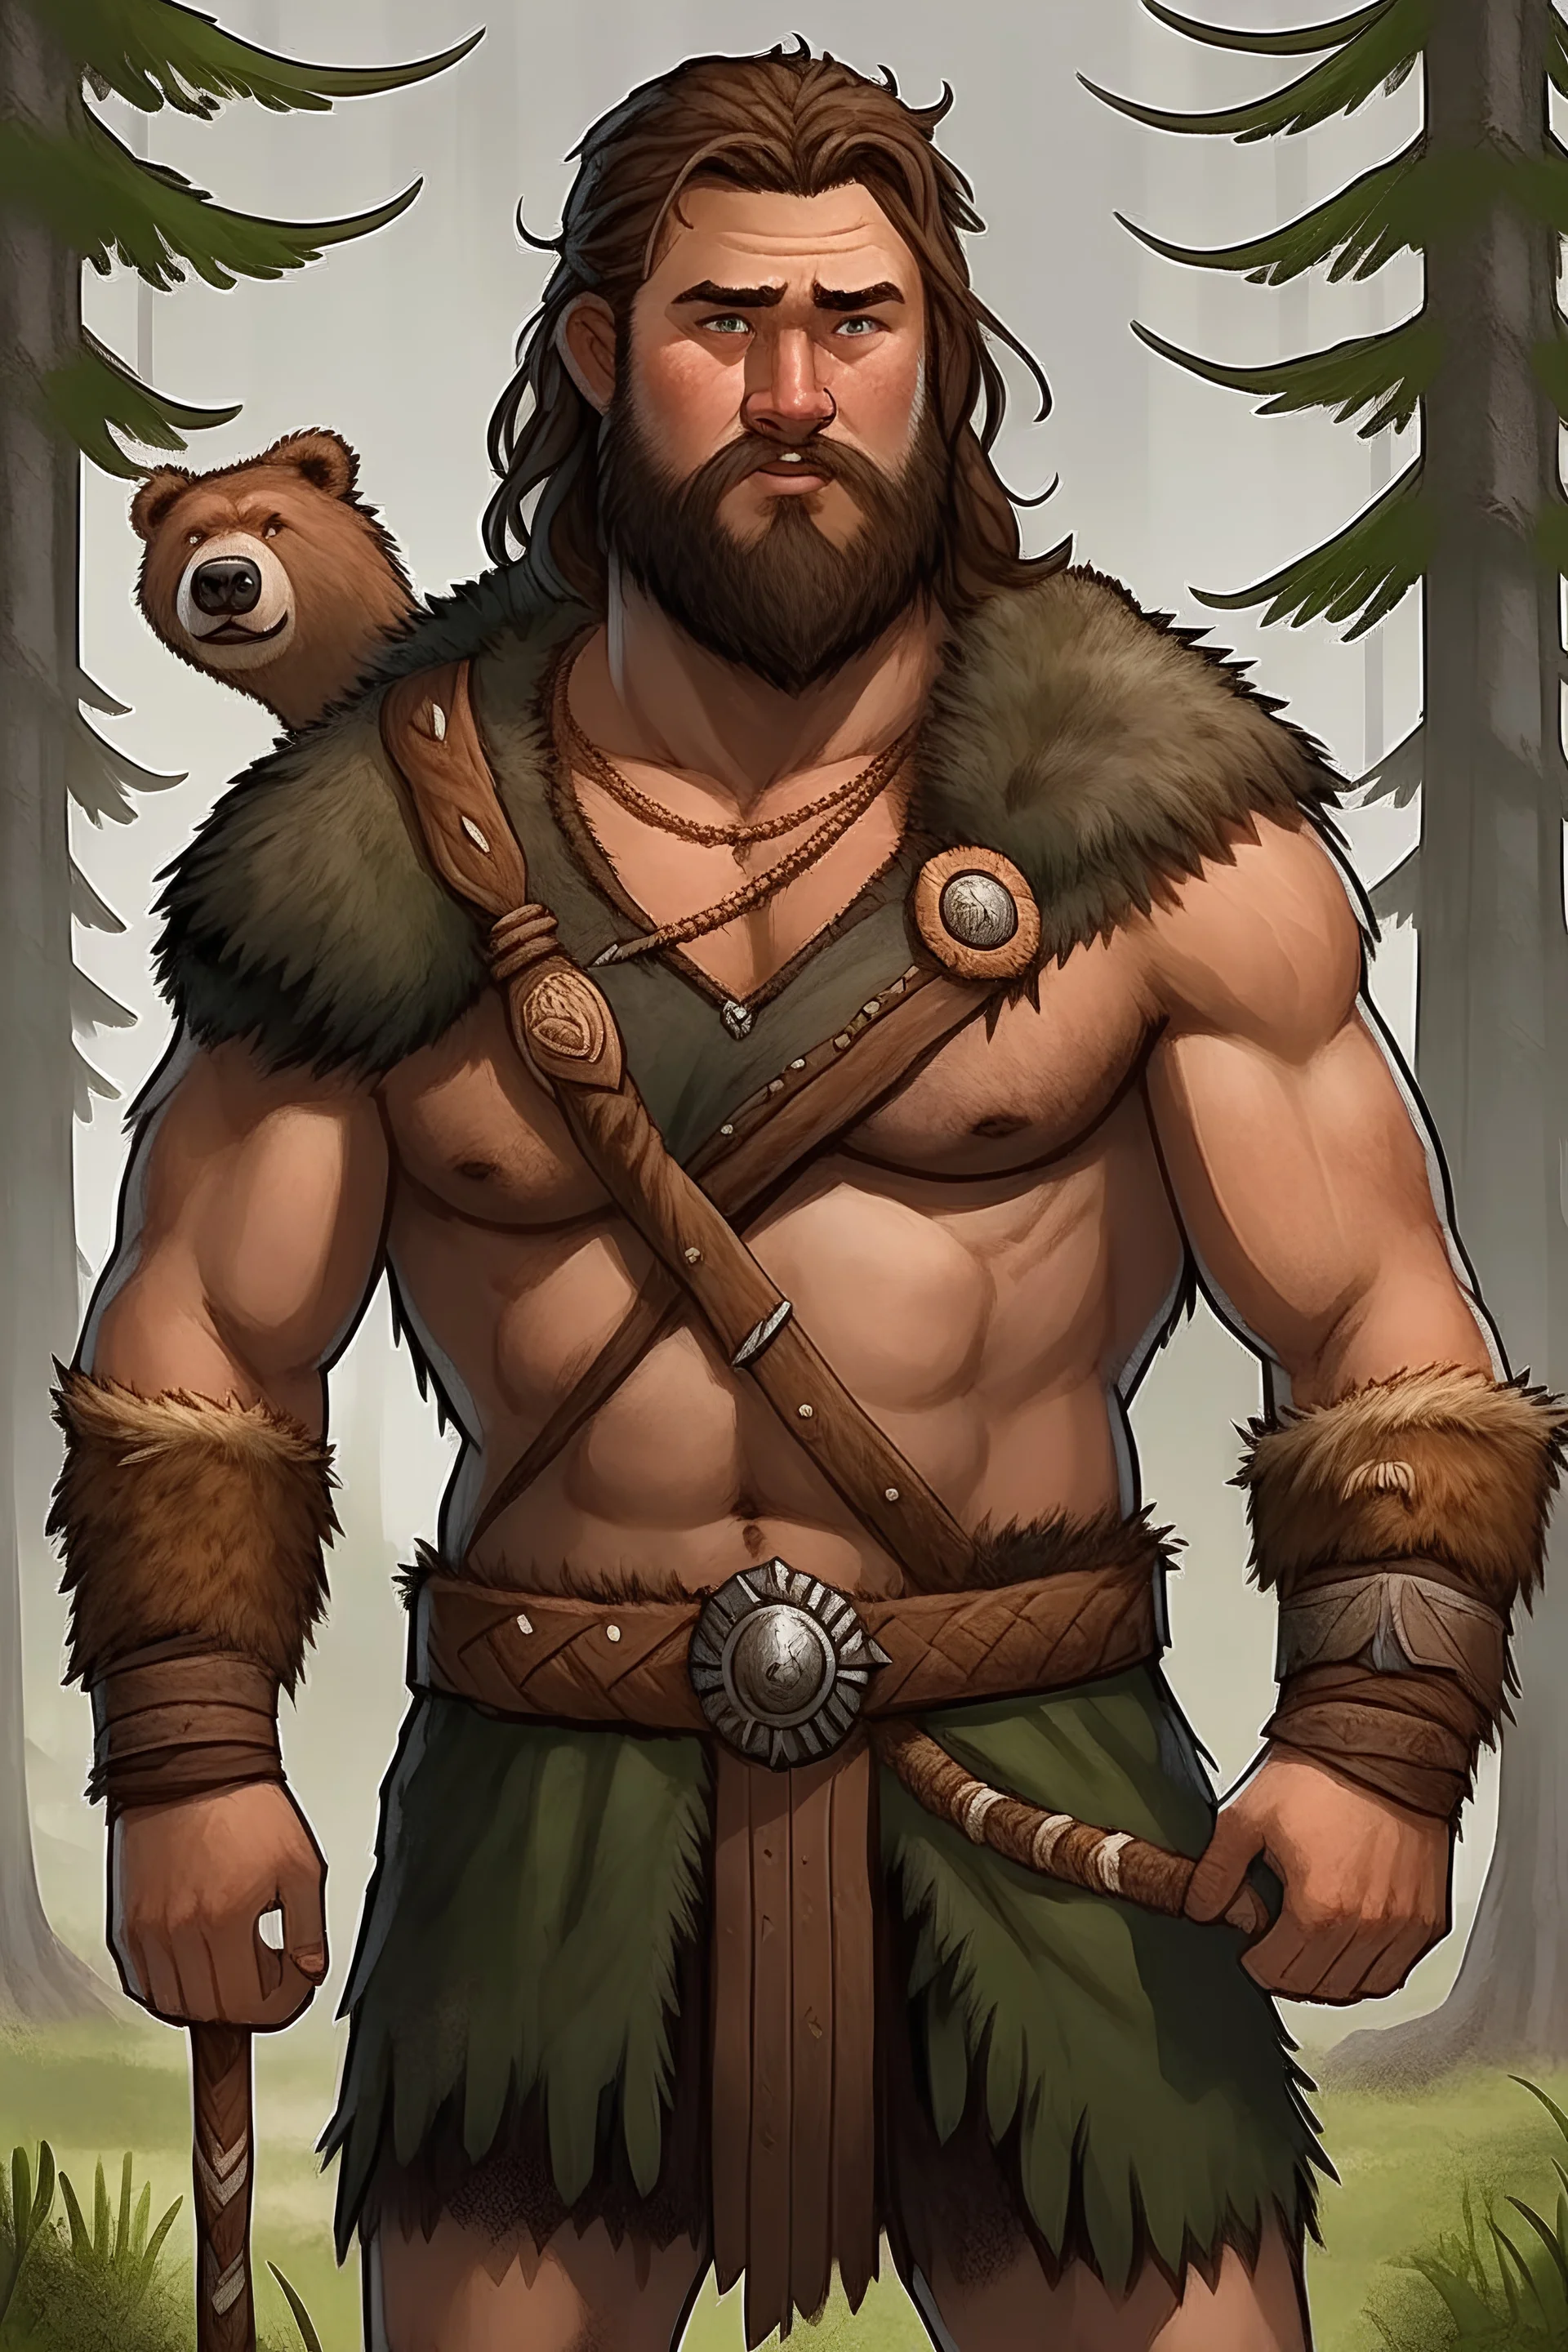 Barbarian druid, young man, bear